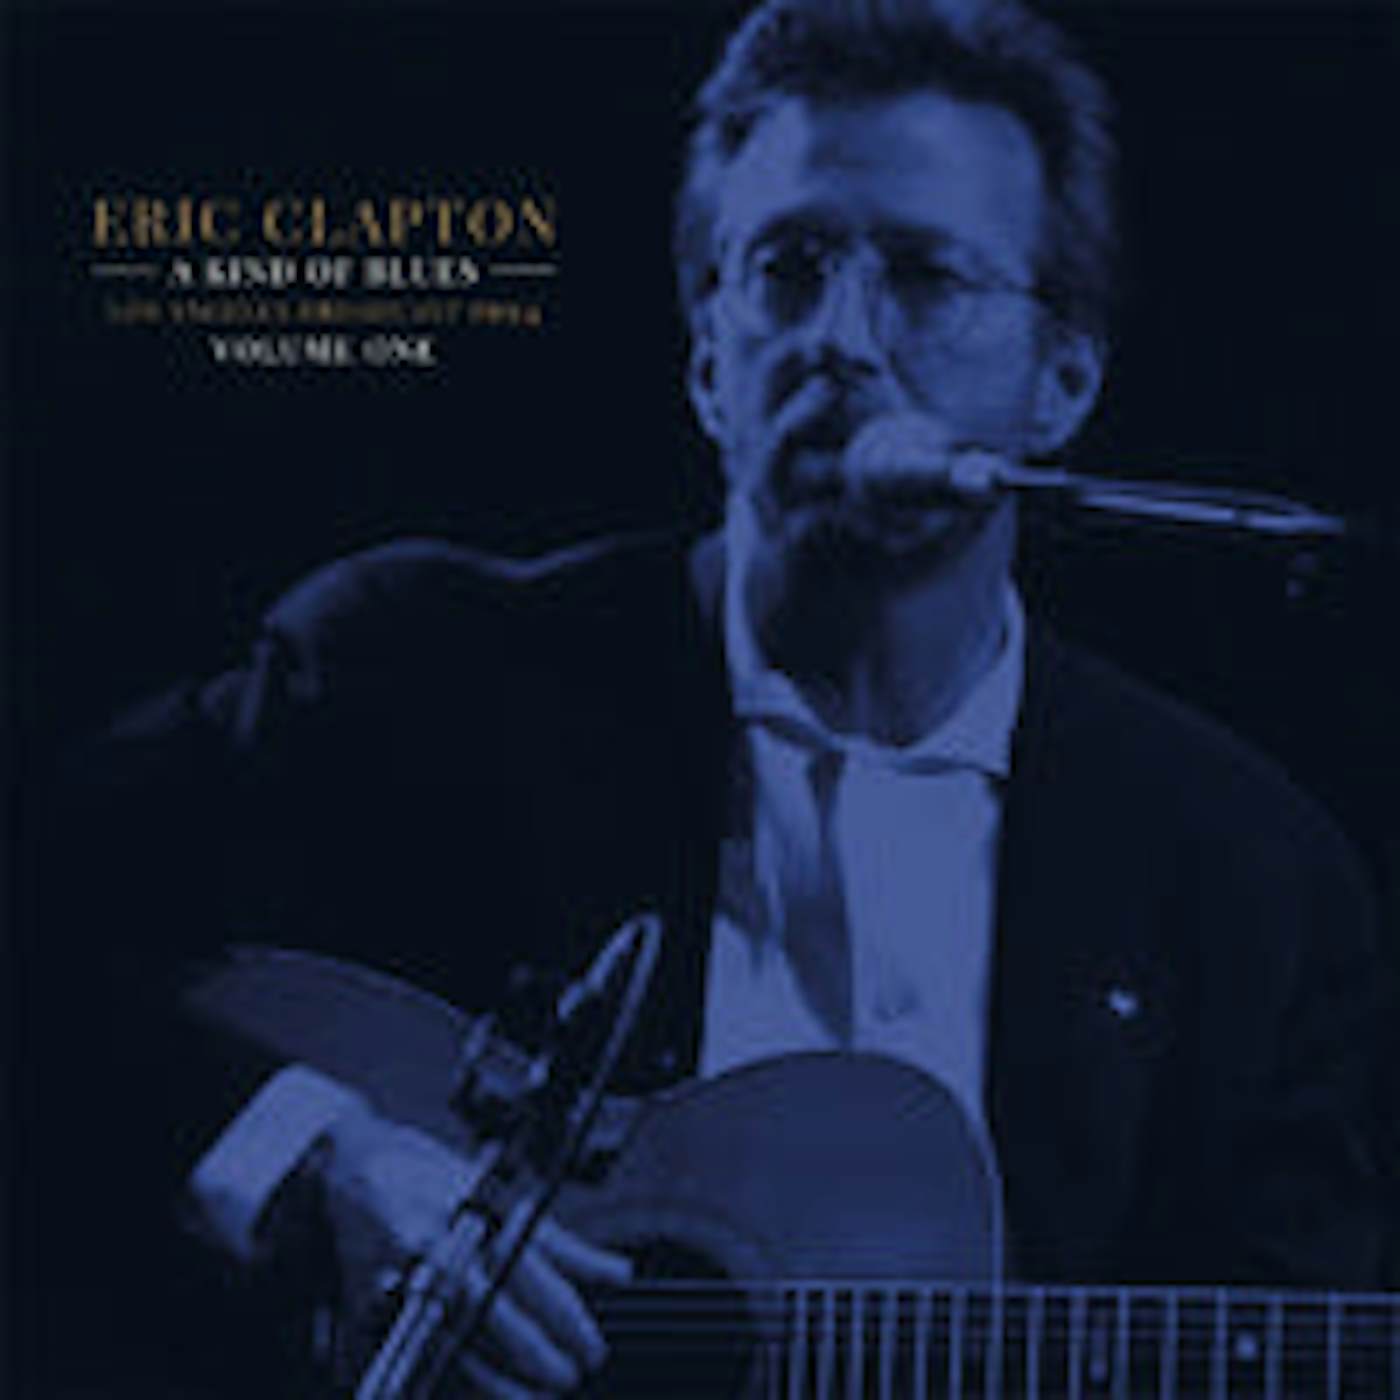 Eric Clapton LP - A Kind Of Blues Vol.1 (Vinyl)